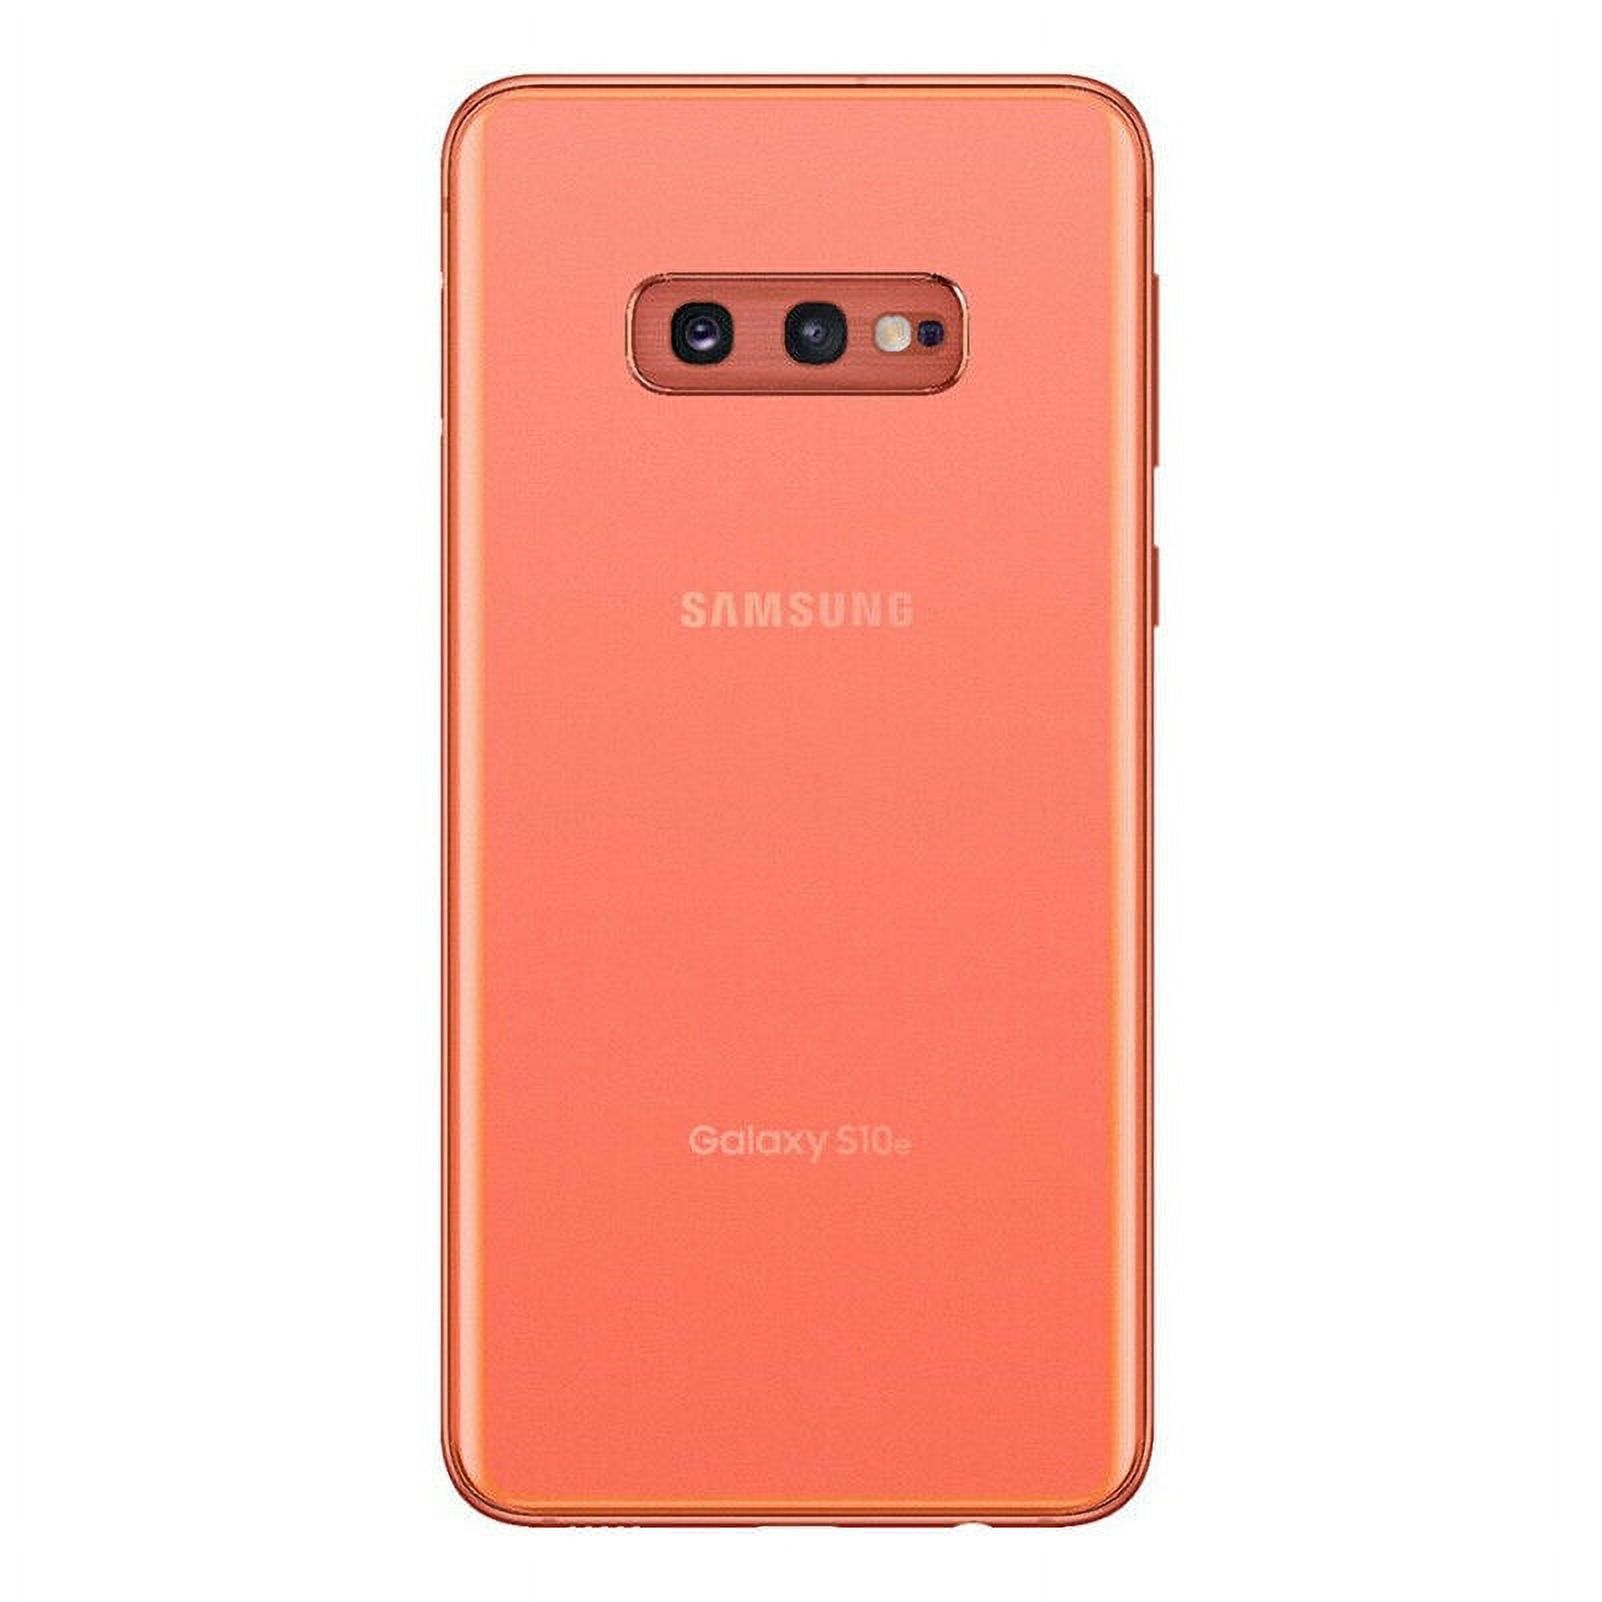 Restored Samsung Galaxy S10e G970U 128GB Factory Unlocked Android Smartphone (Refurbished) - image 1 of 4